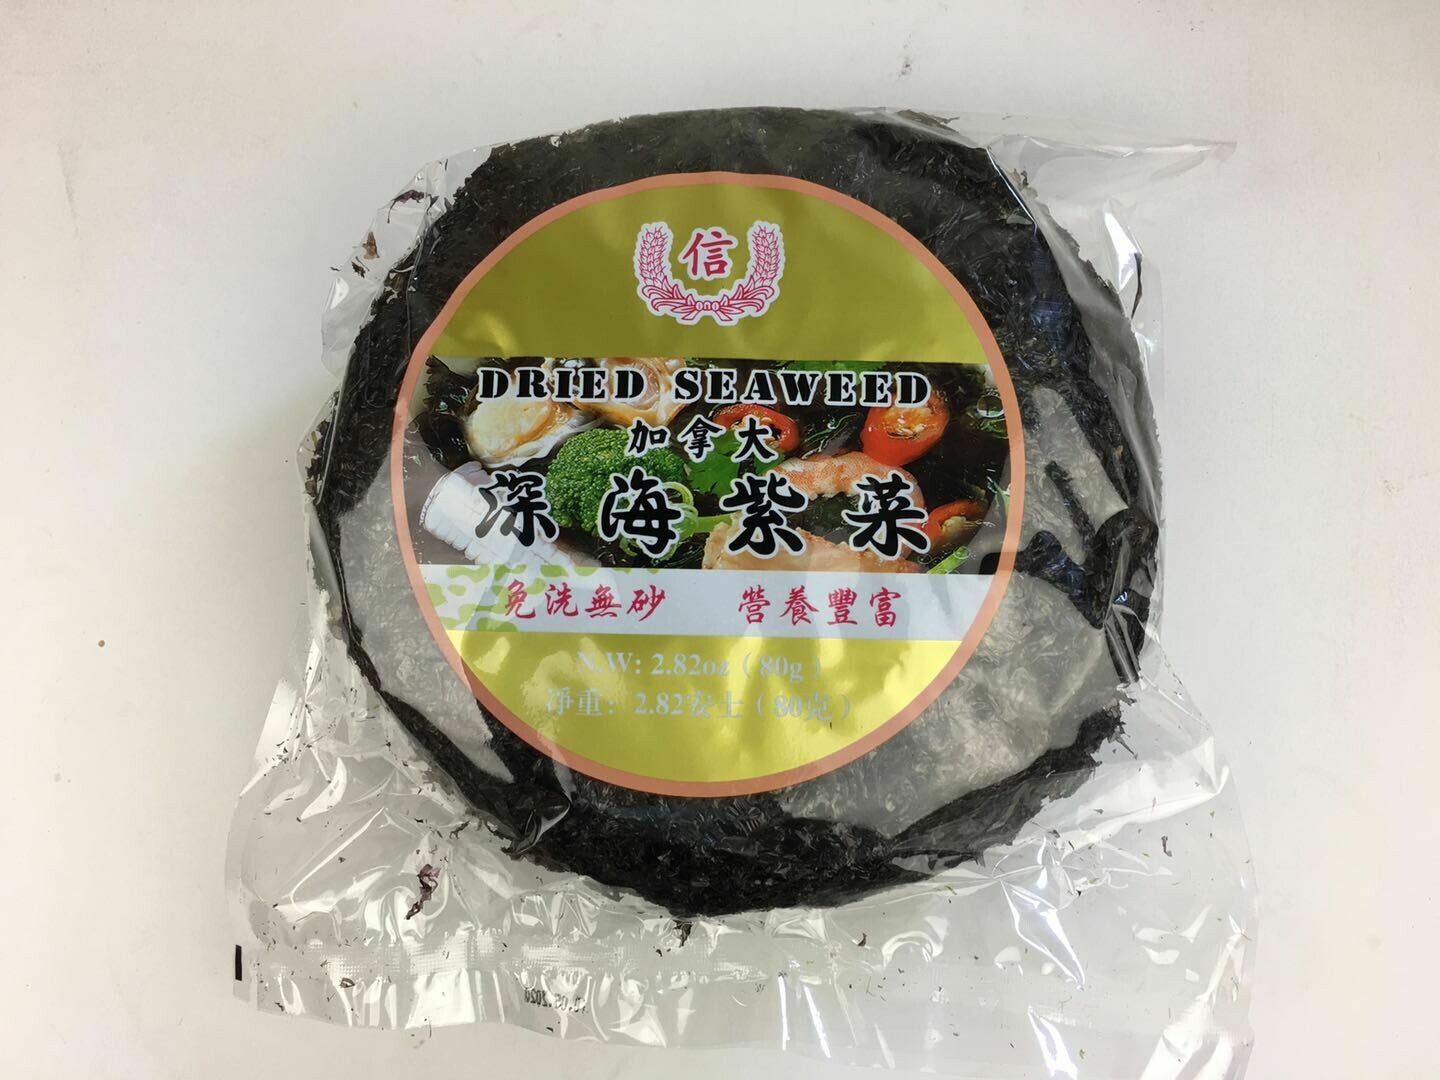 Seaweed Cake 2.82oz 紫菜饼(加拿大) 本周特价